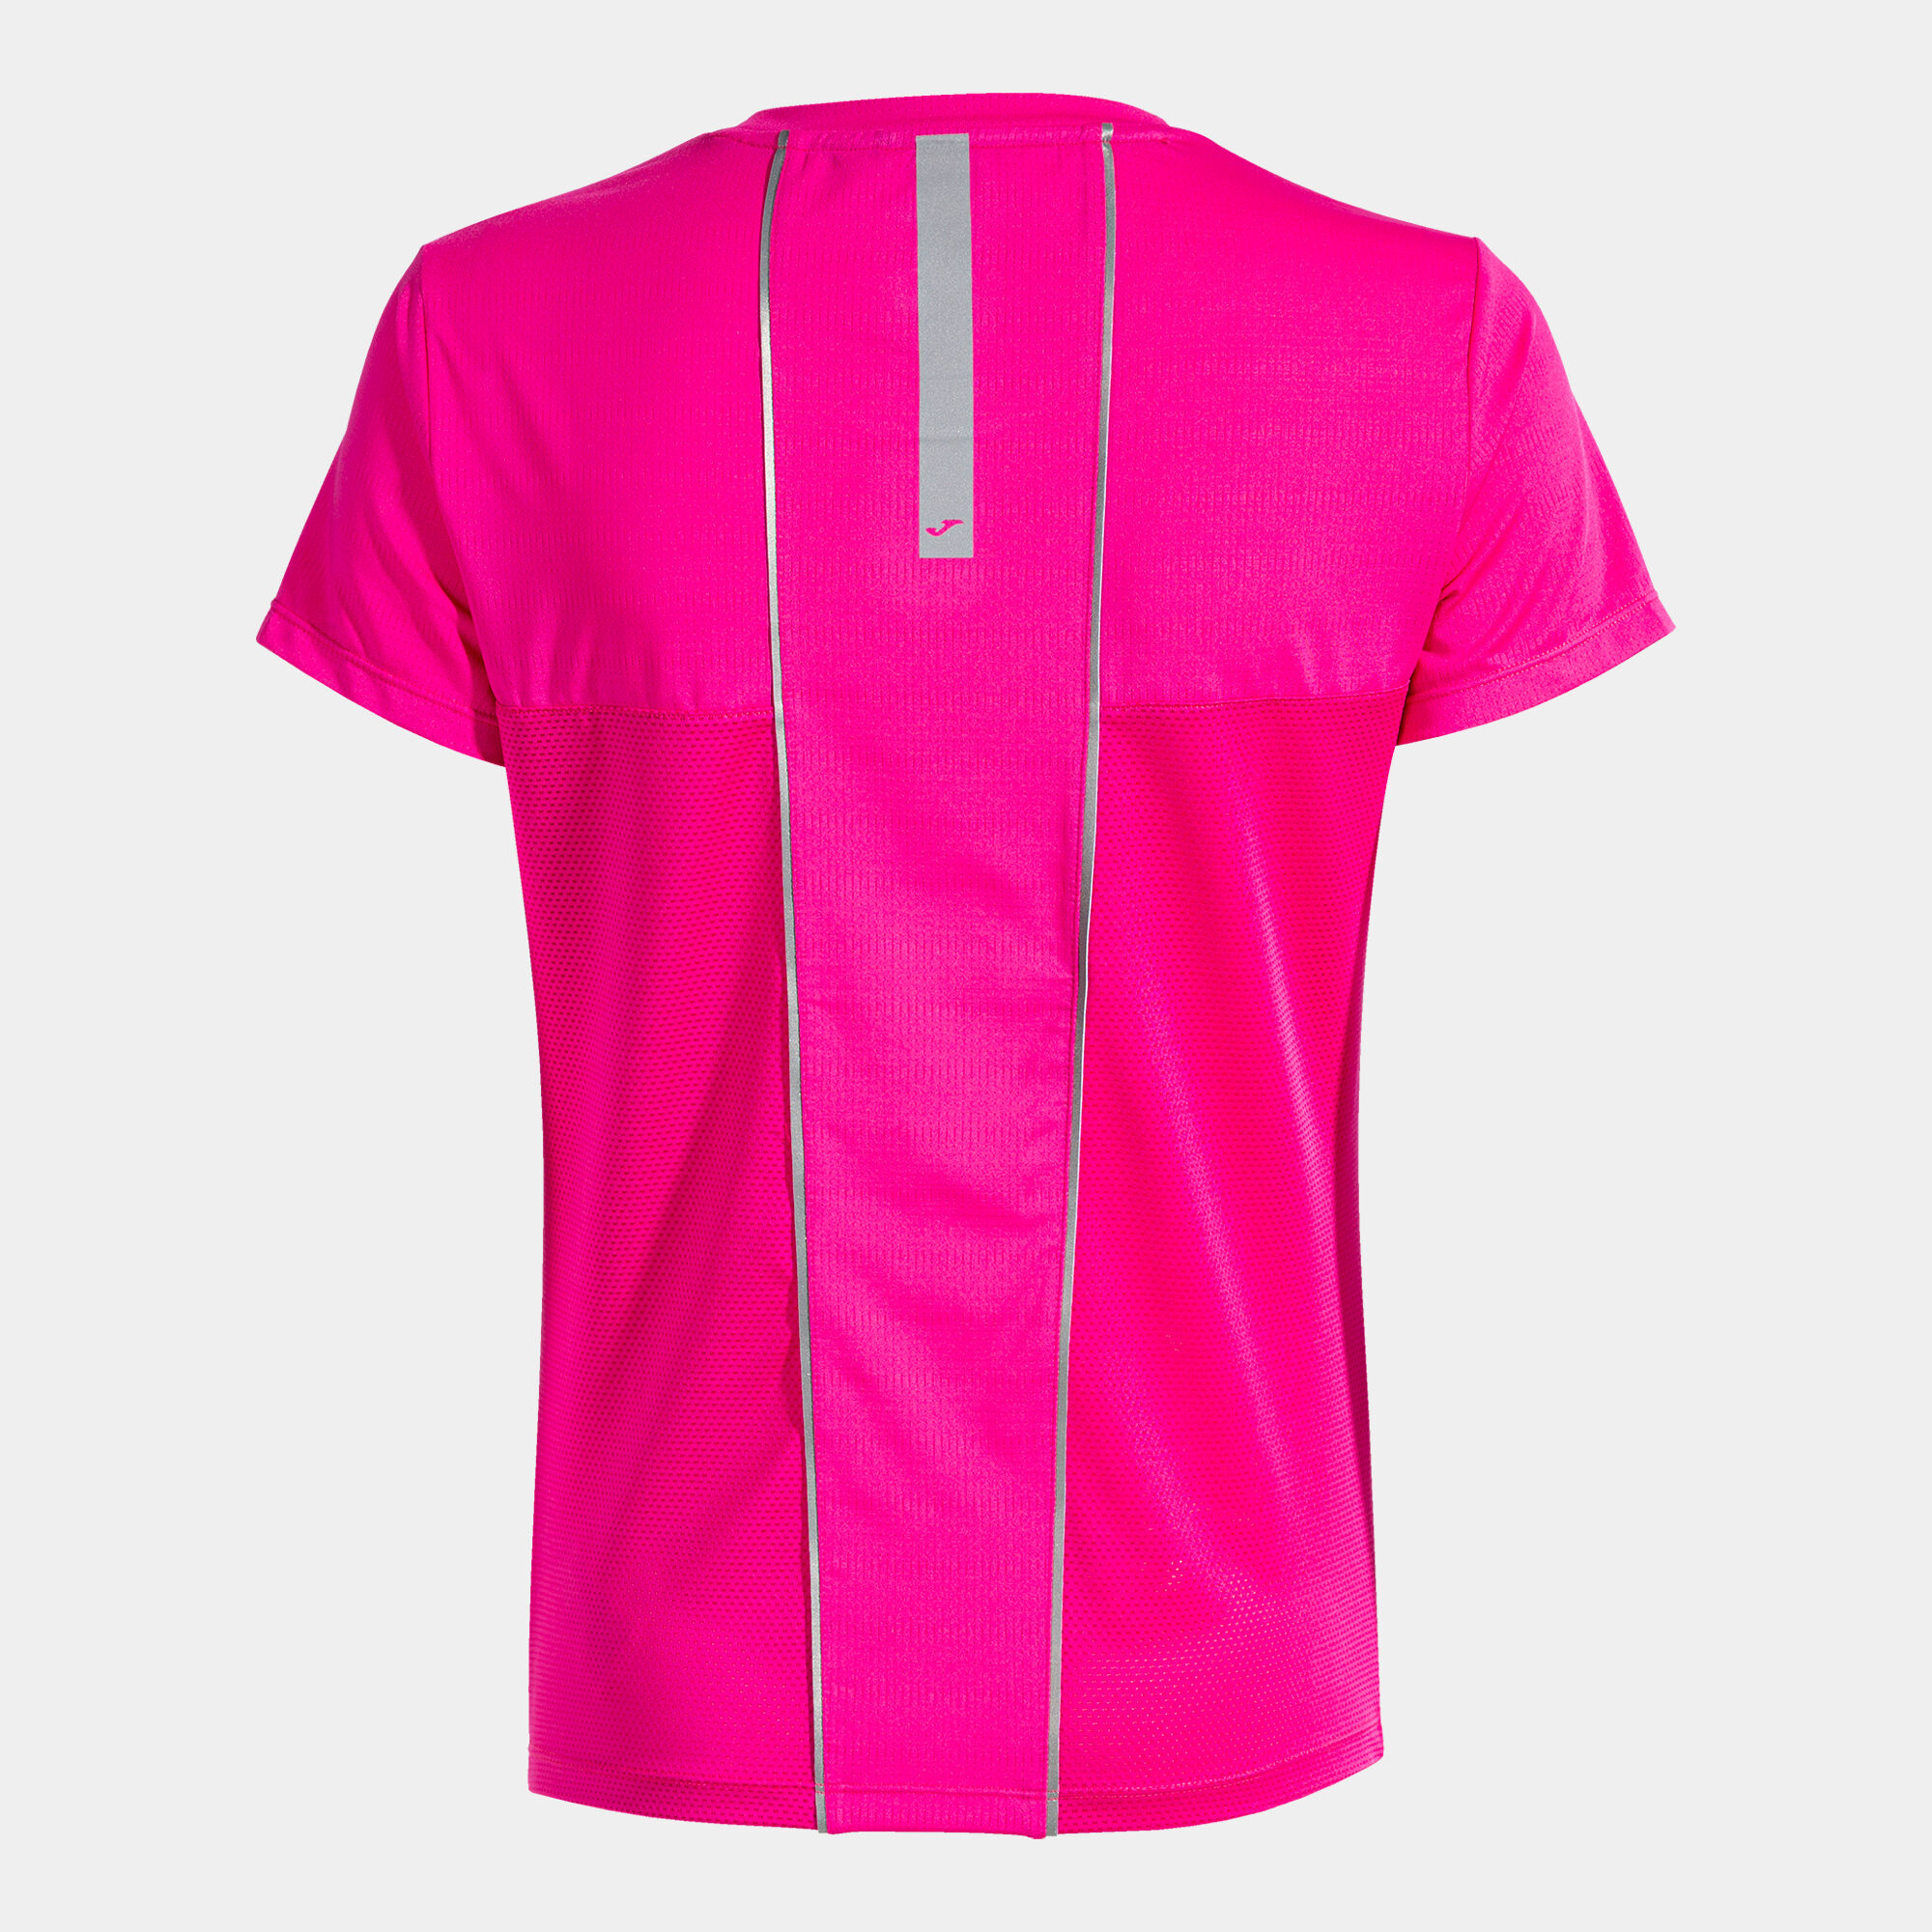 Camiseta manga corta mujer R-Night rosa